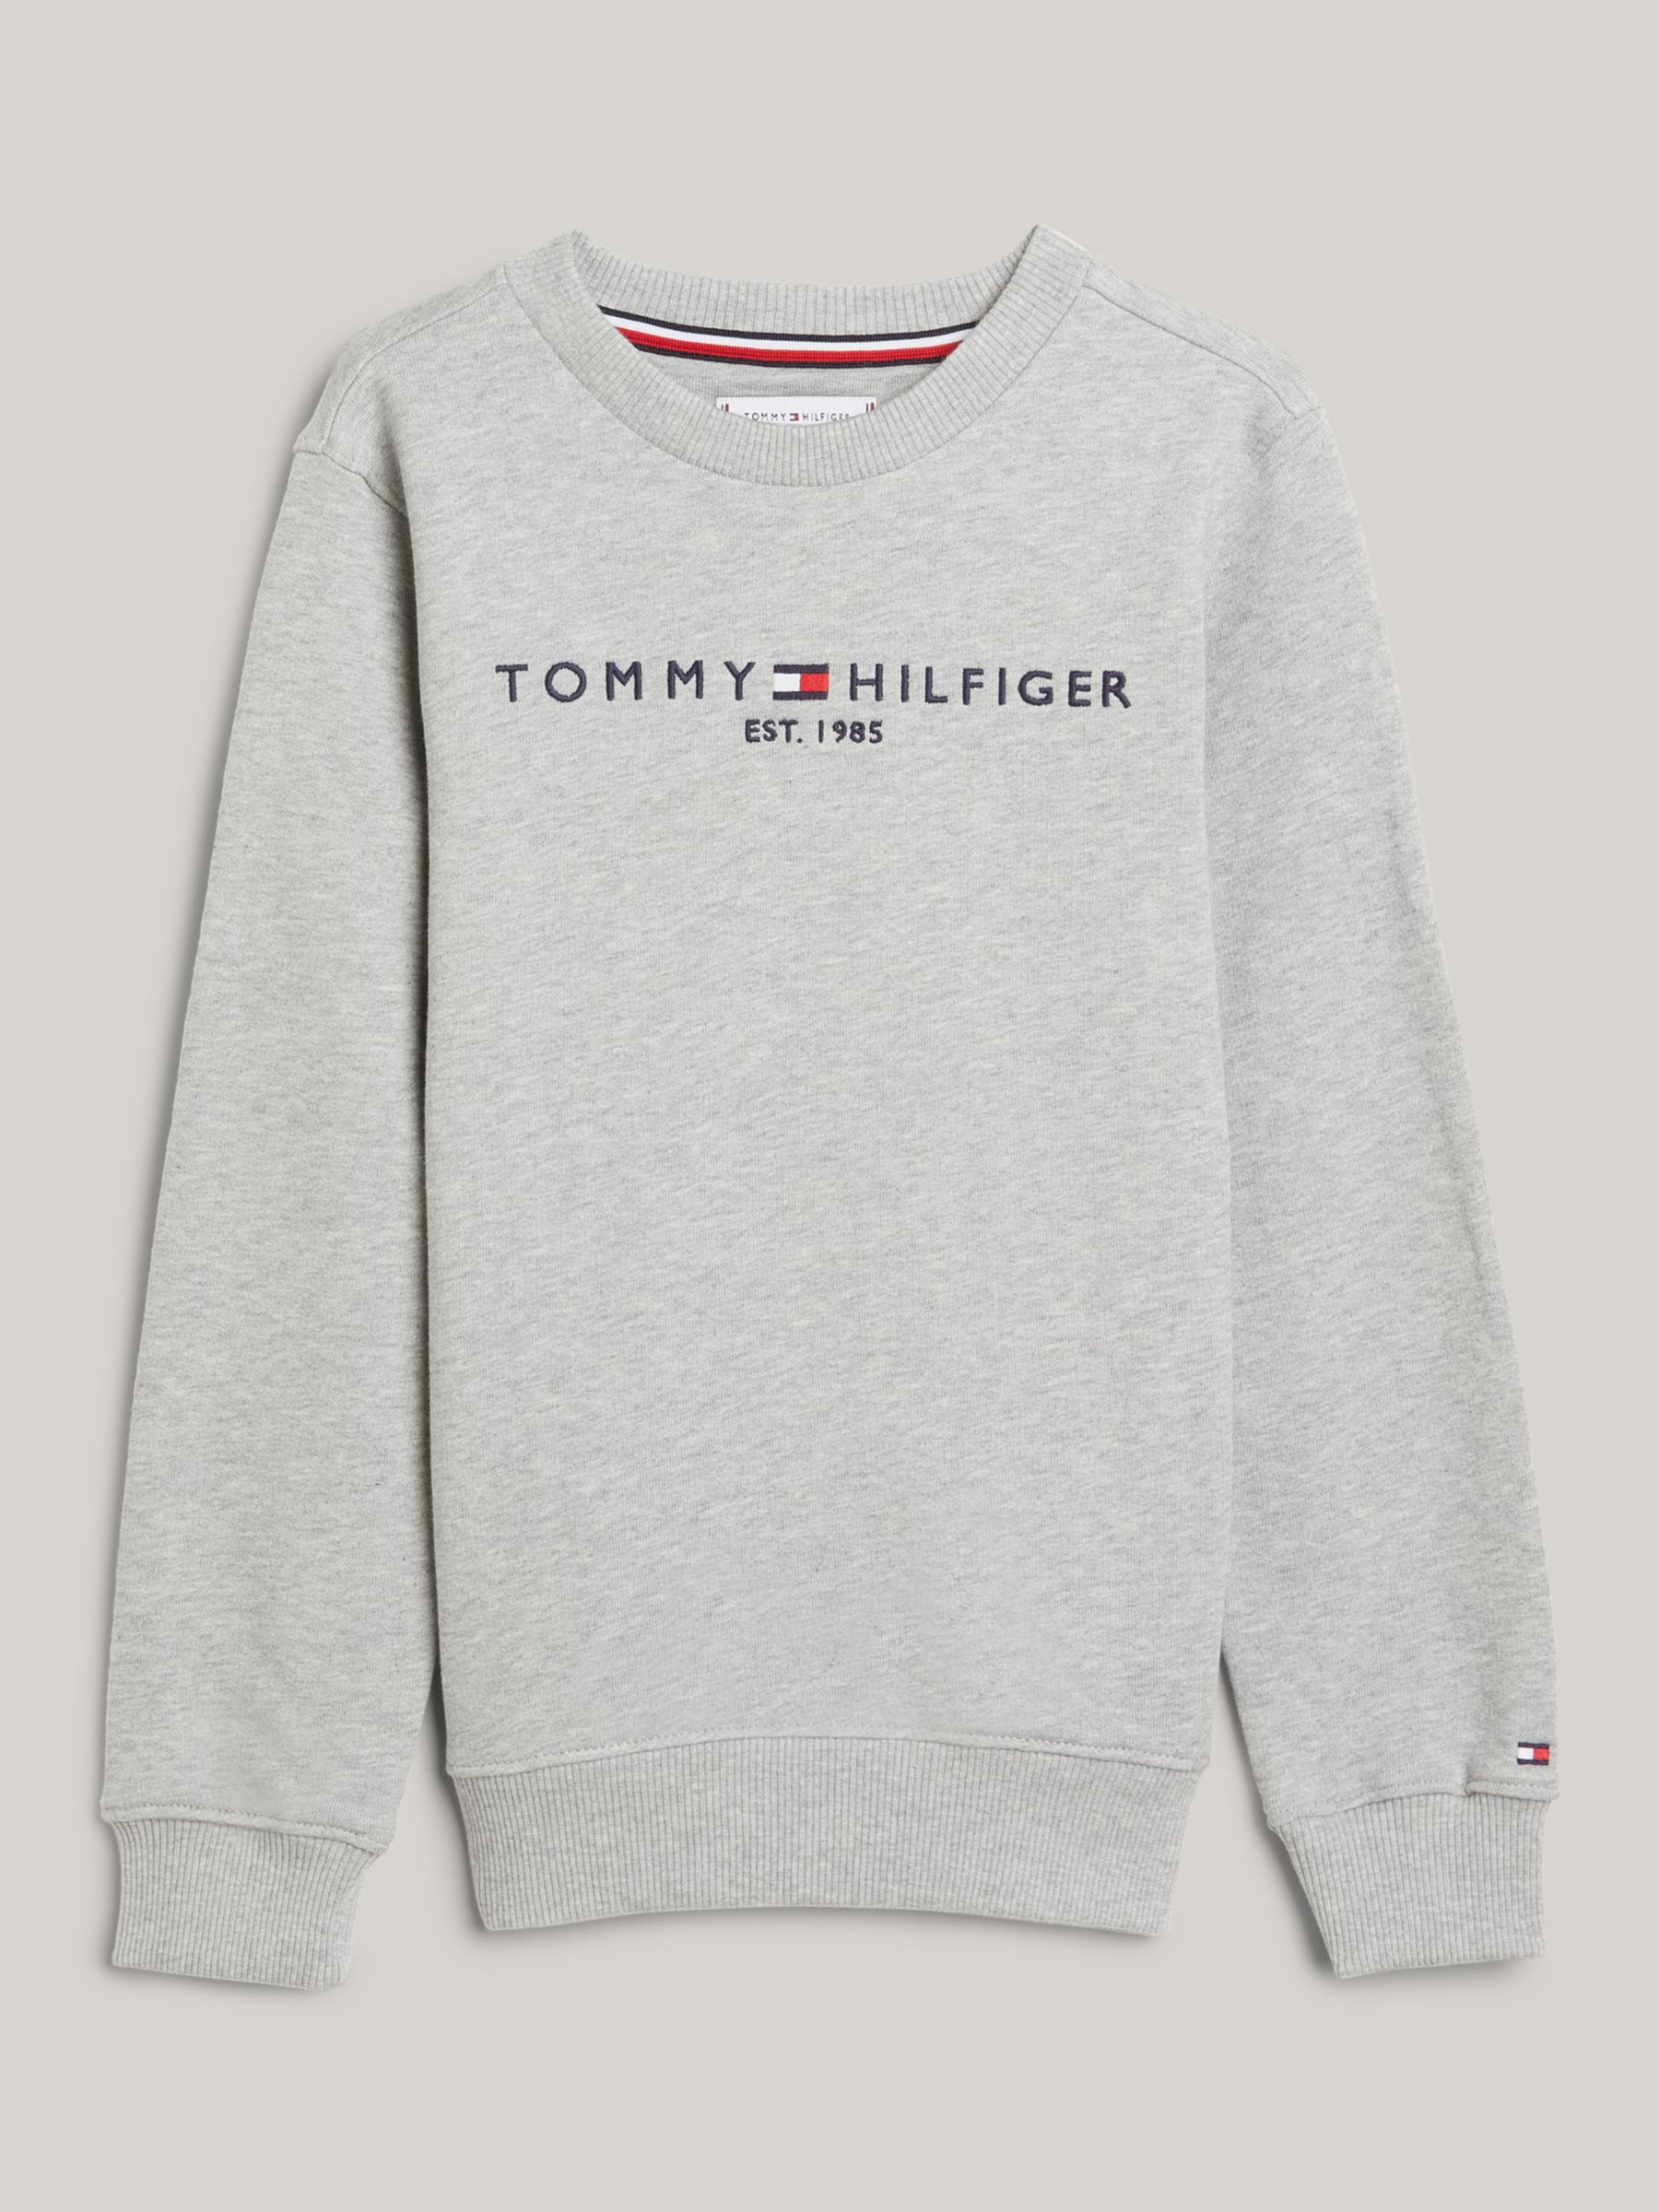 Tommy Hilfiger Kids' Essential Organic Cotton Logo Sweatshirt, Light Grey  Heather at John Lewis & Partners